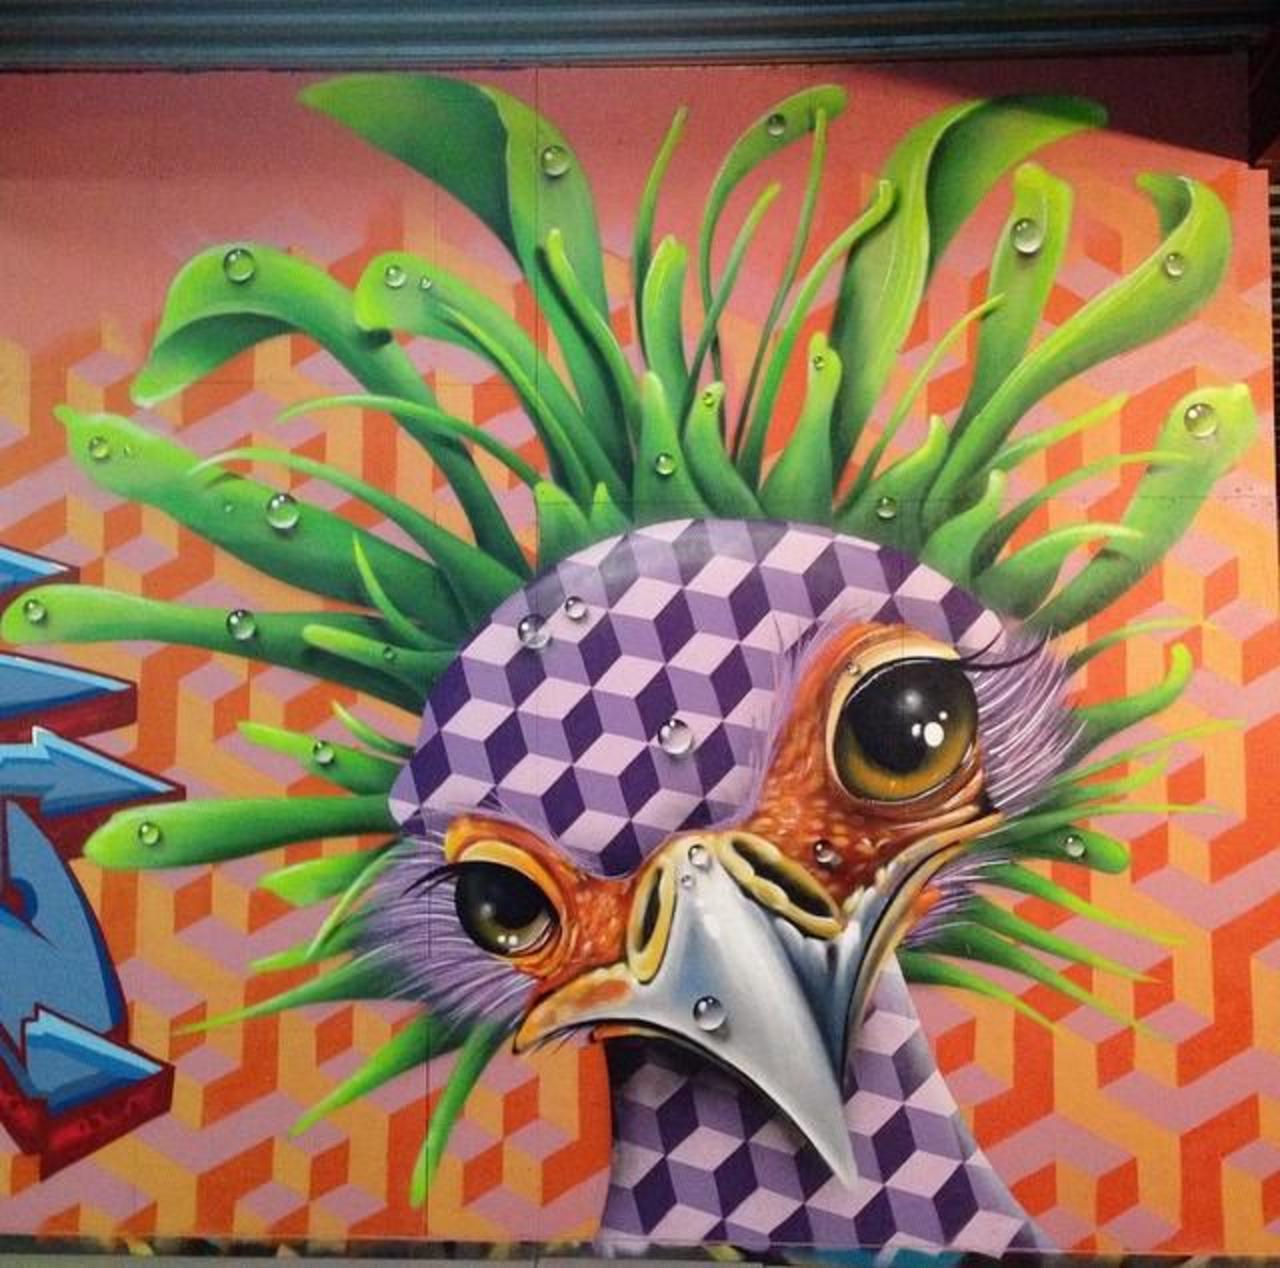 Love this nature in Street Art by artist TimTimmey 

#art #mural #graffiti #streetart http://t.co/SogNL2p2oe

RT @GoogleStreetArt @5putnik1